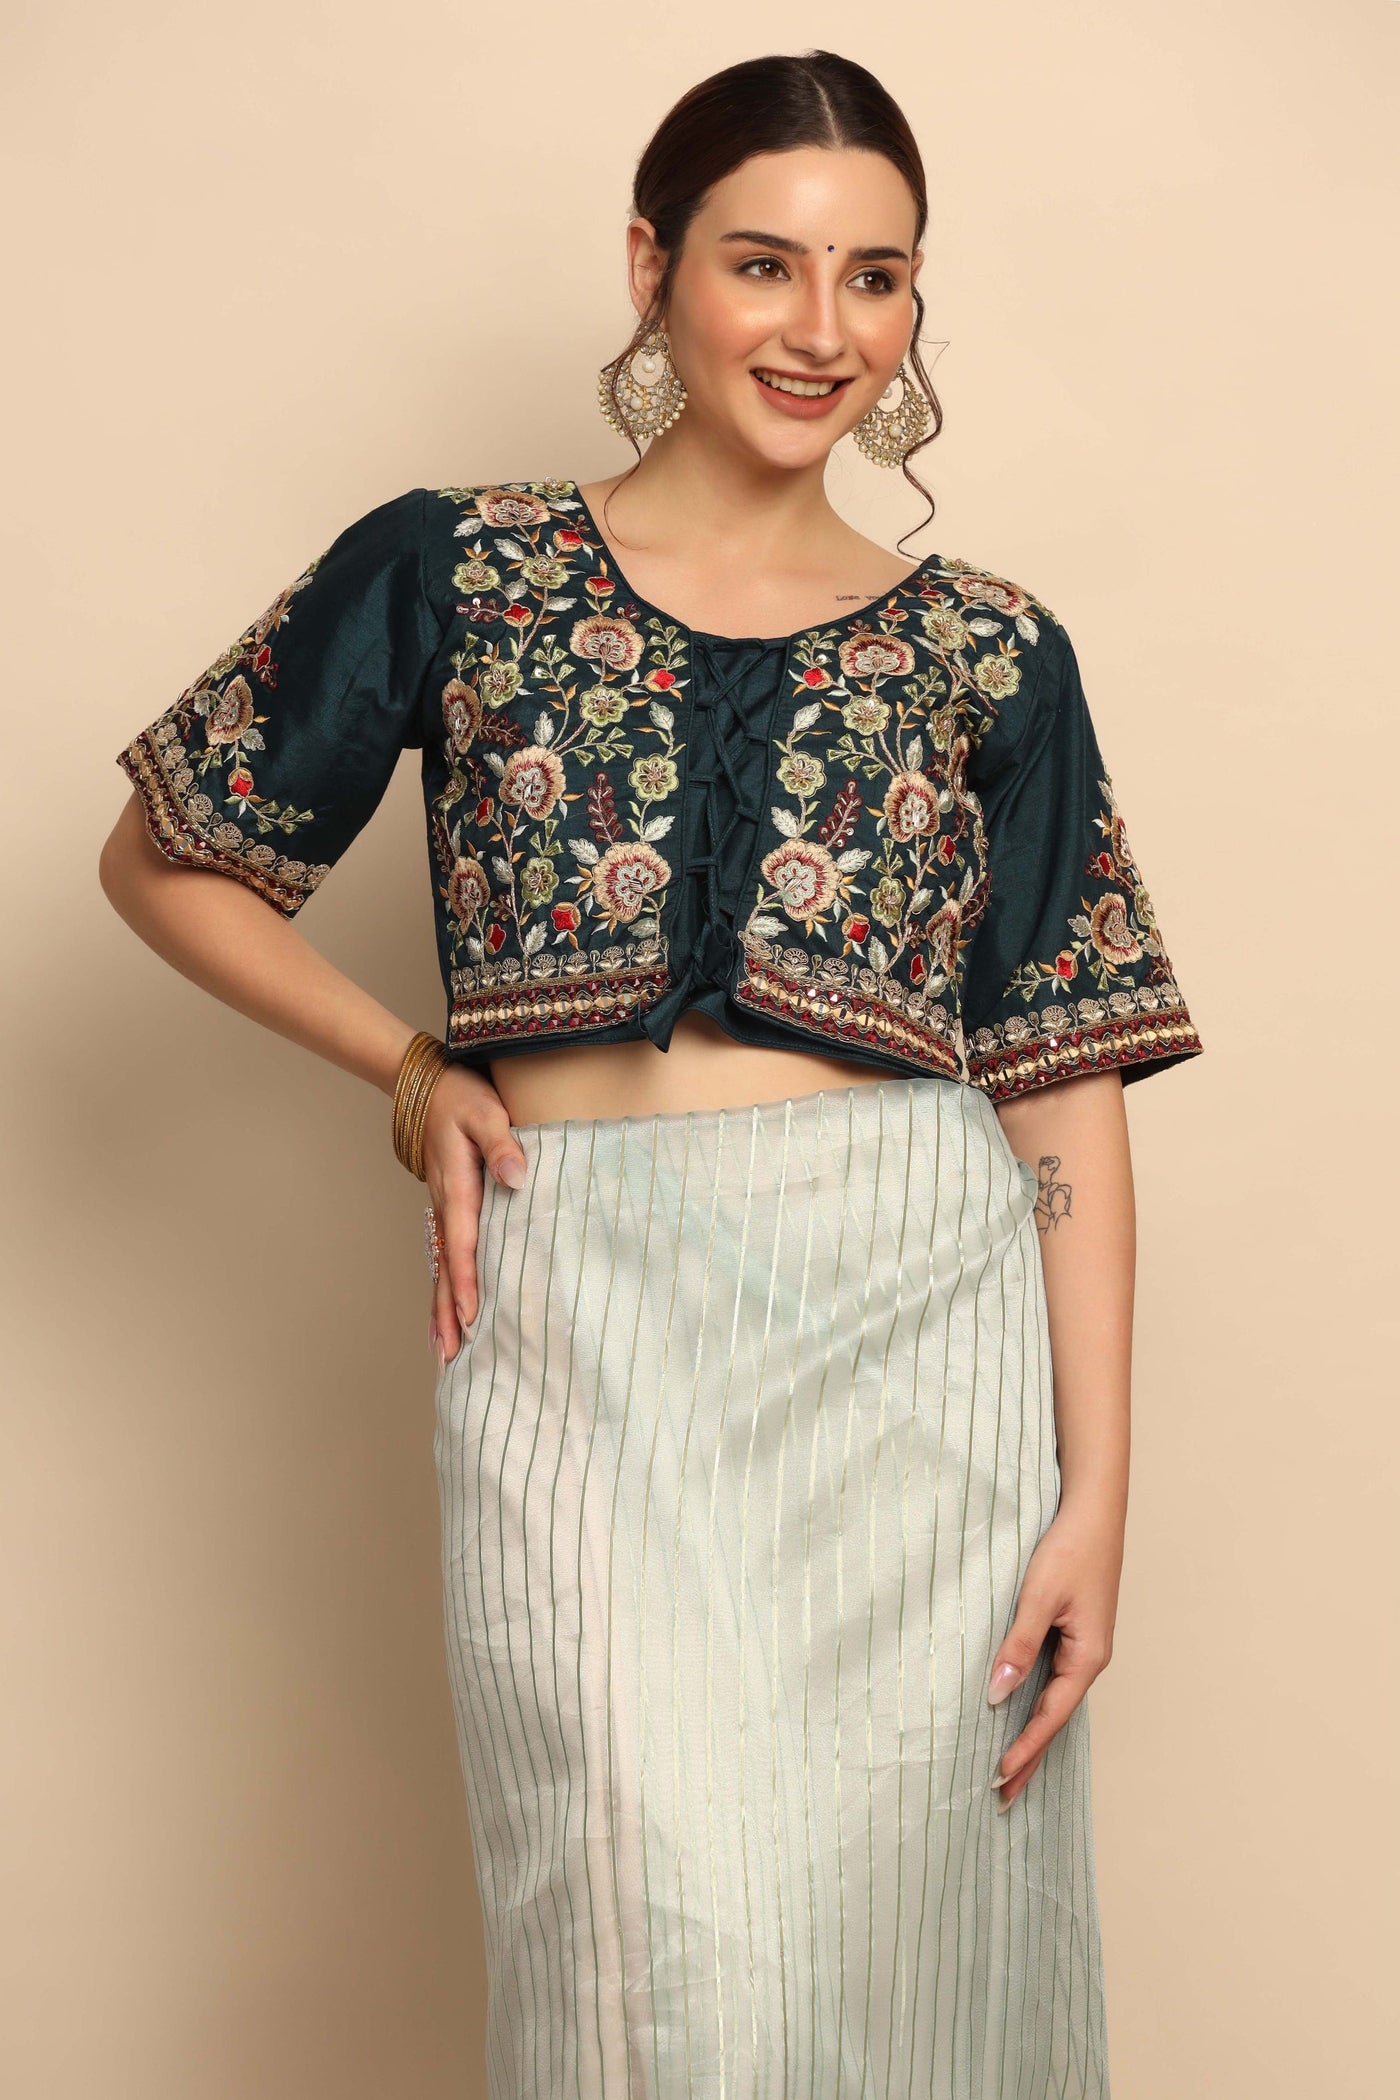 Exquisite Organza Saree with Heavy Blouse | Thread Work, Mirror, Sequins, Pipe Work"